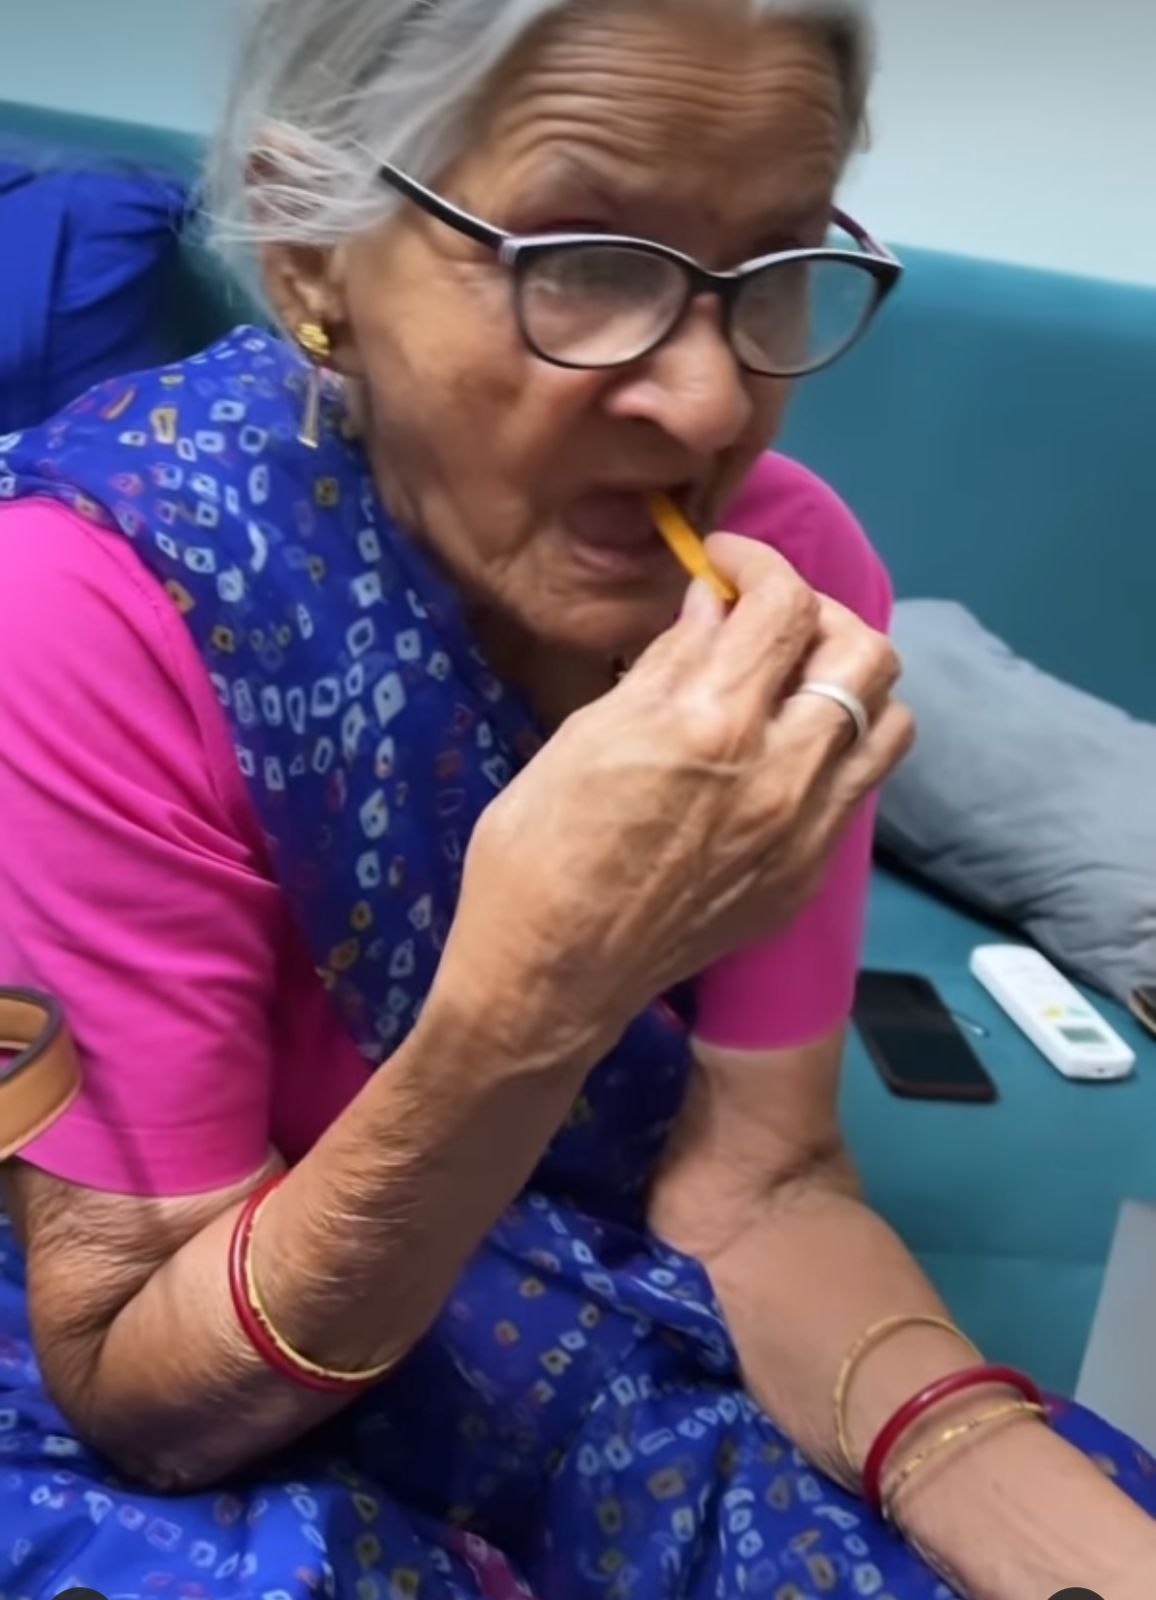 Watch toothless desi dadi munching on McDonald’s peri peri fries in adorable viral video